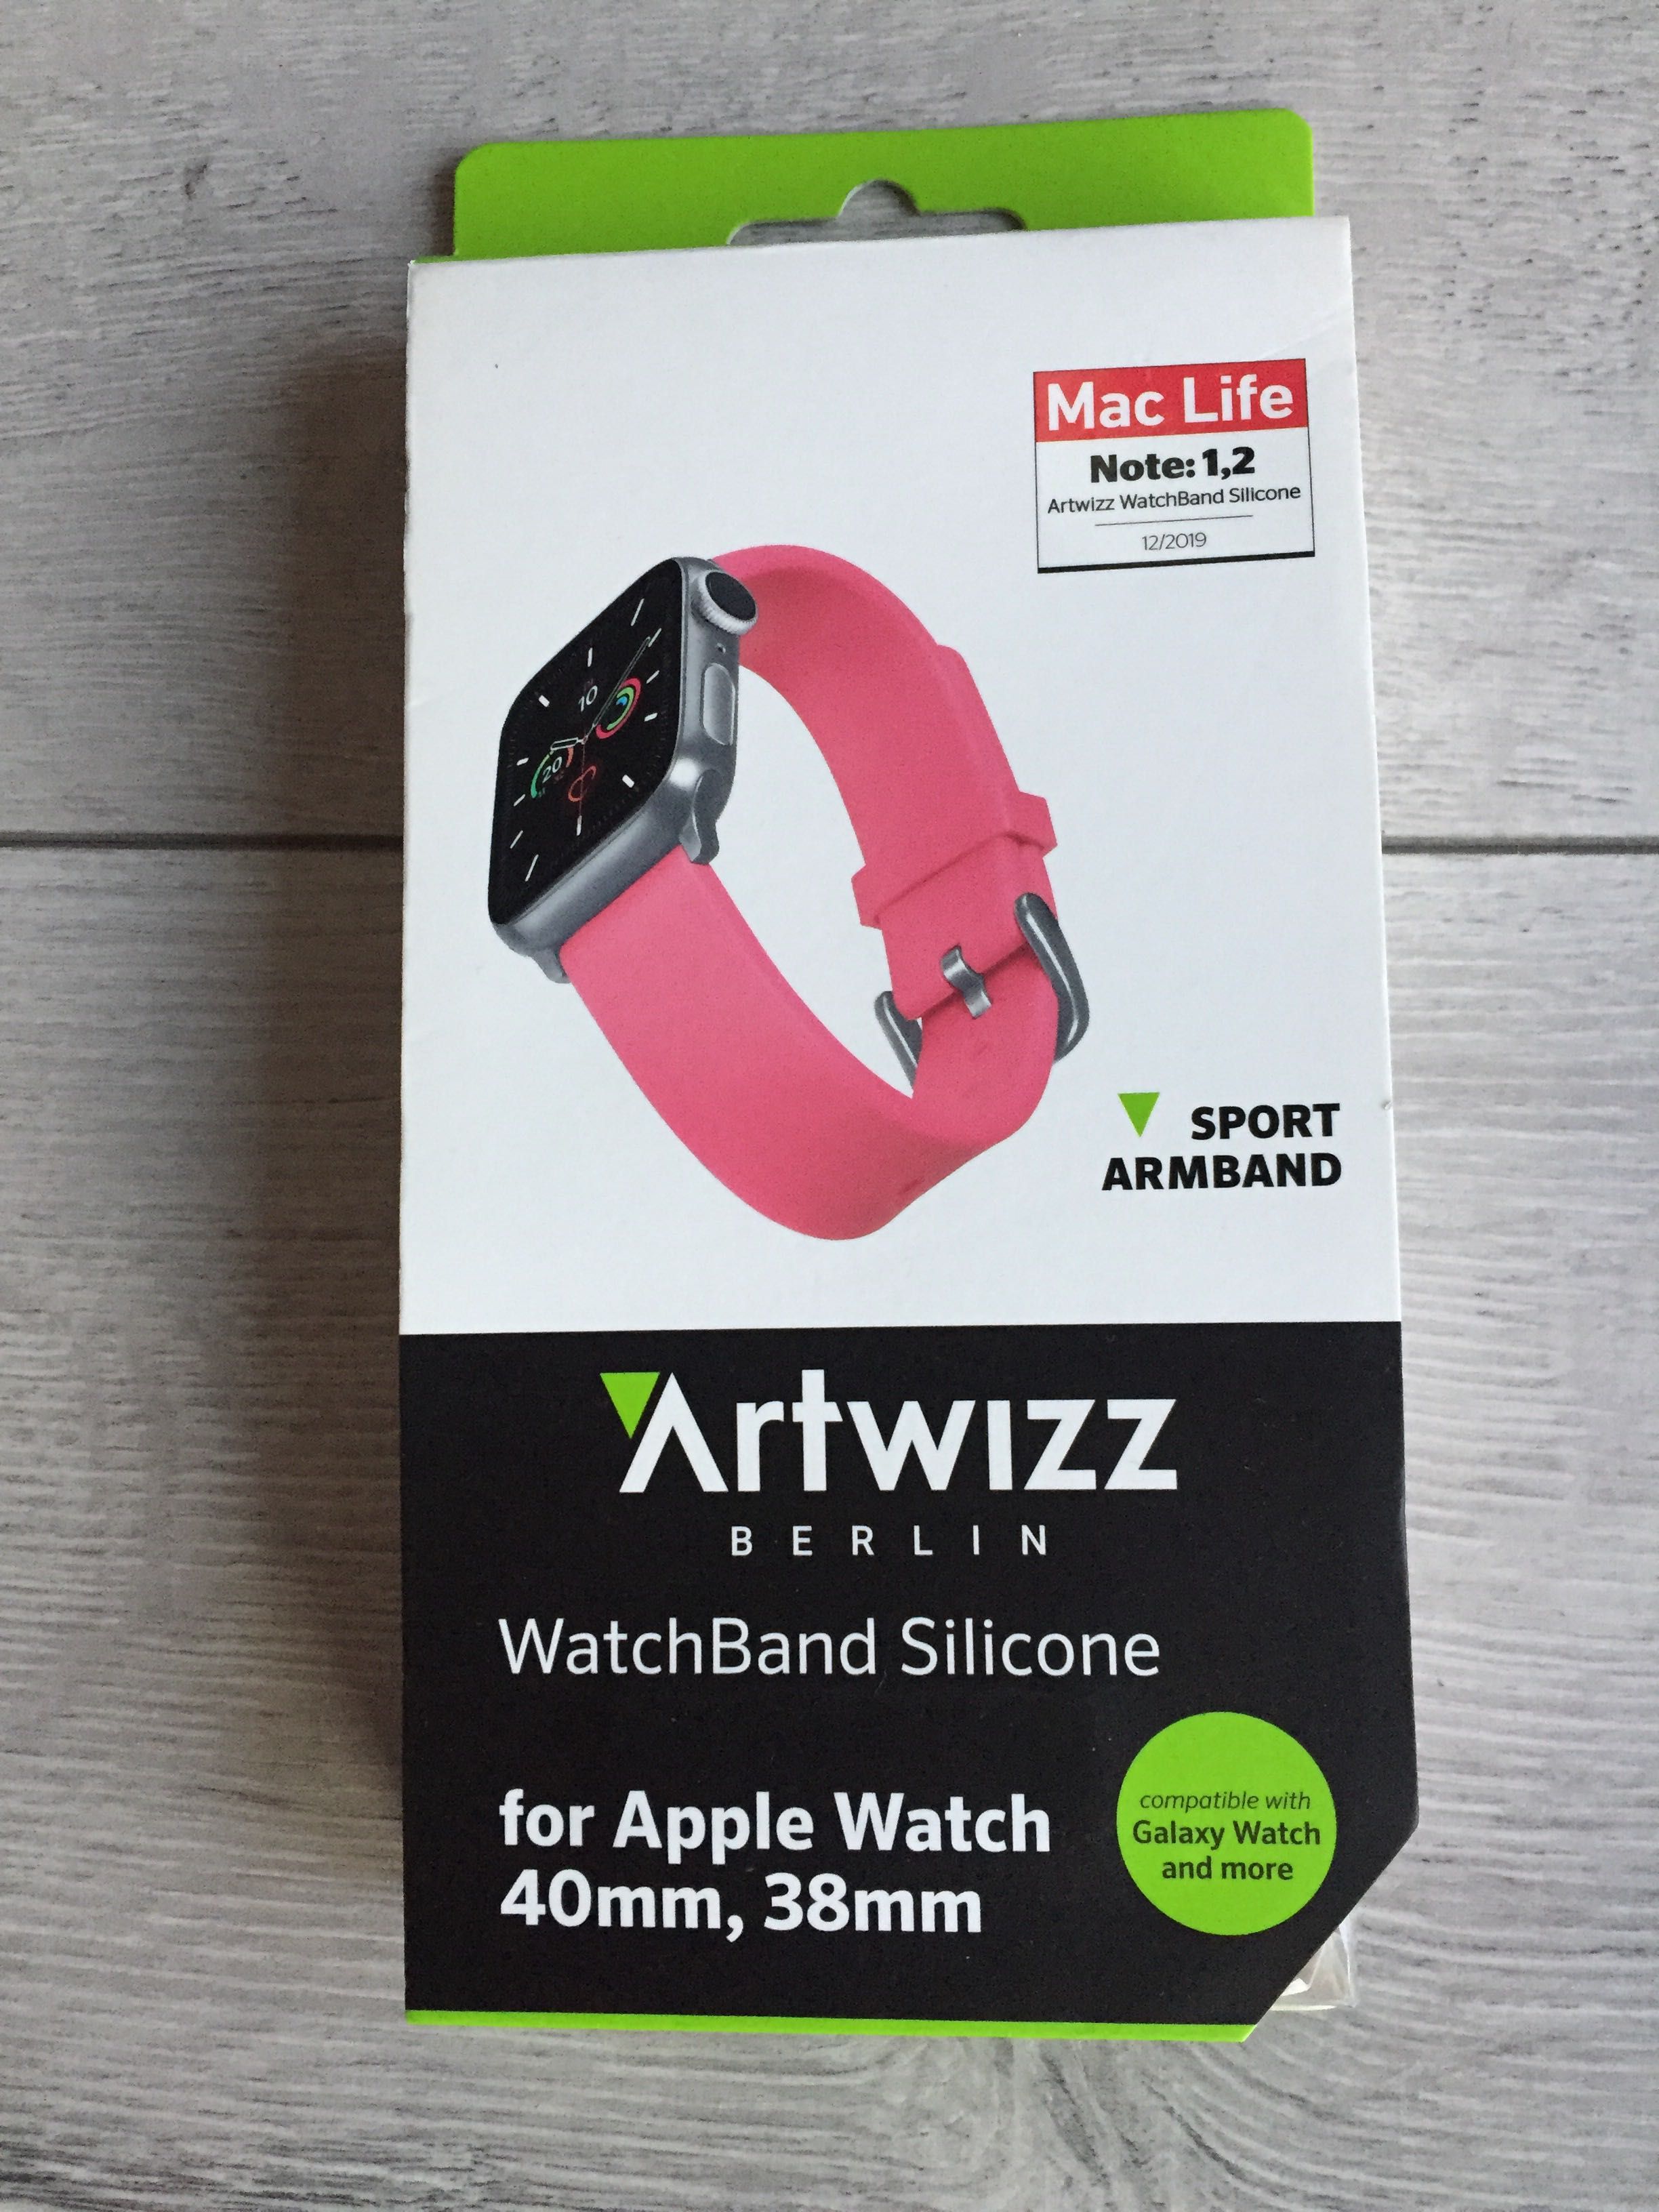 Artwizz Berlin Watchband Silicone for Apple Watch